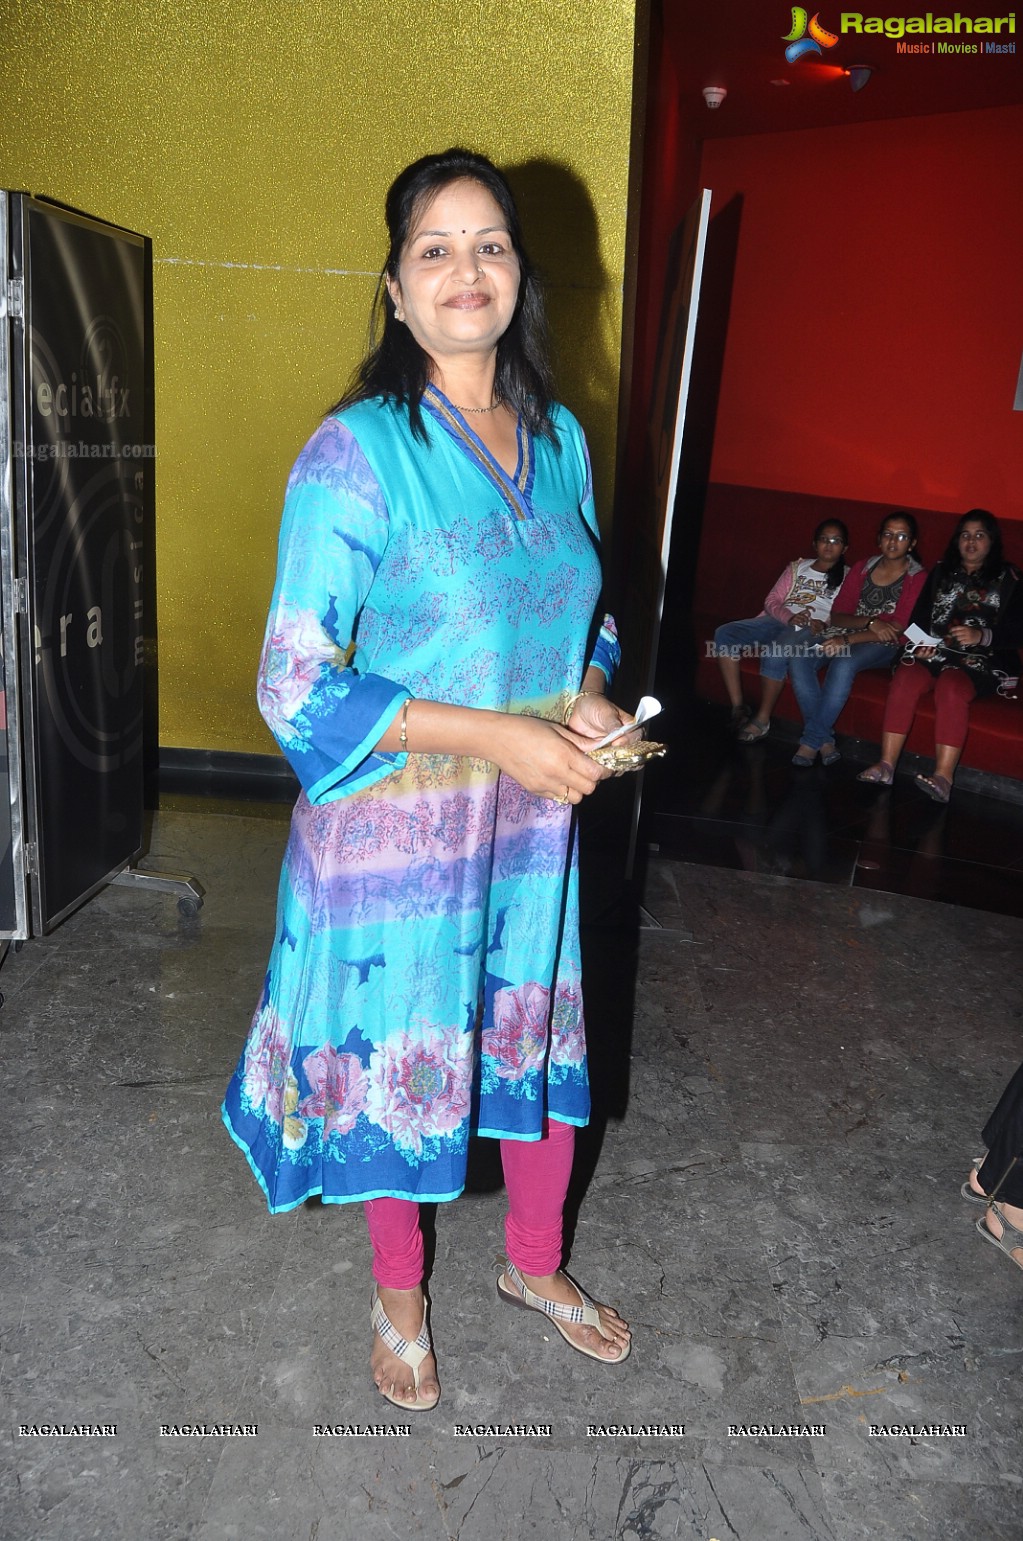 Sheetal Nahata's Charity Fundraiser Movie Show ABCD